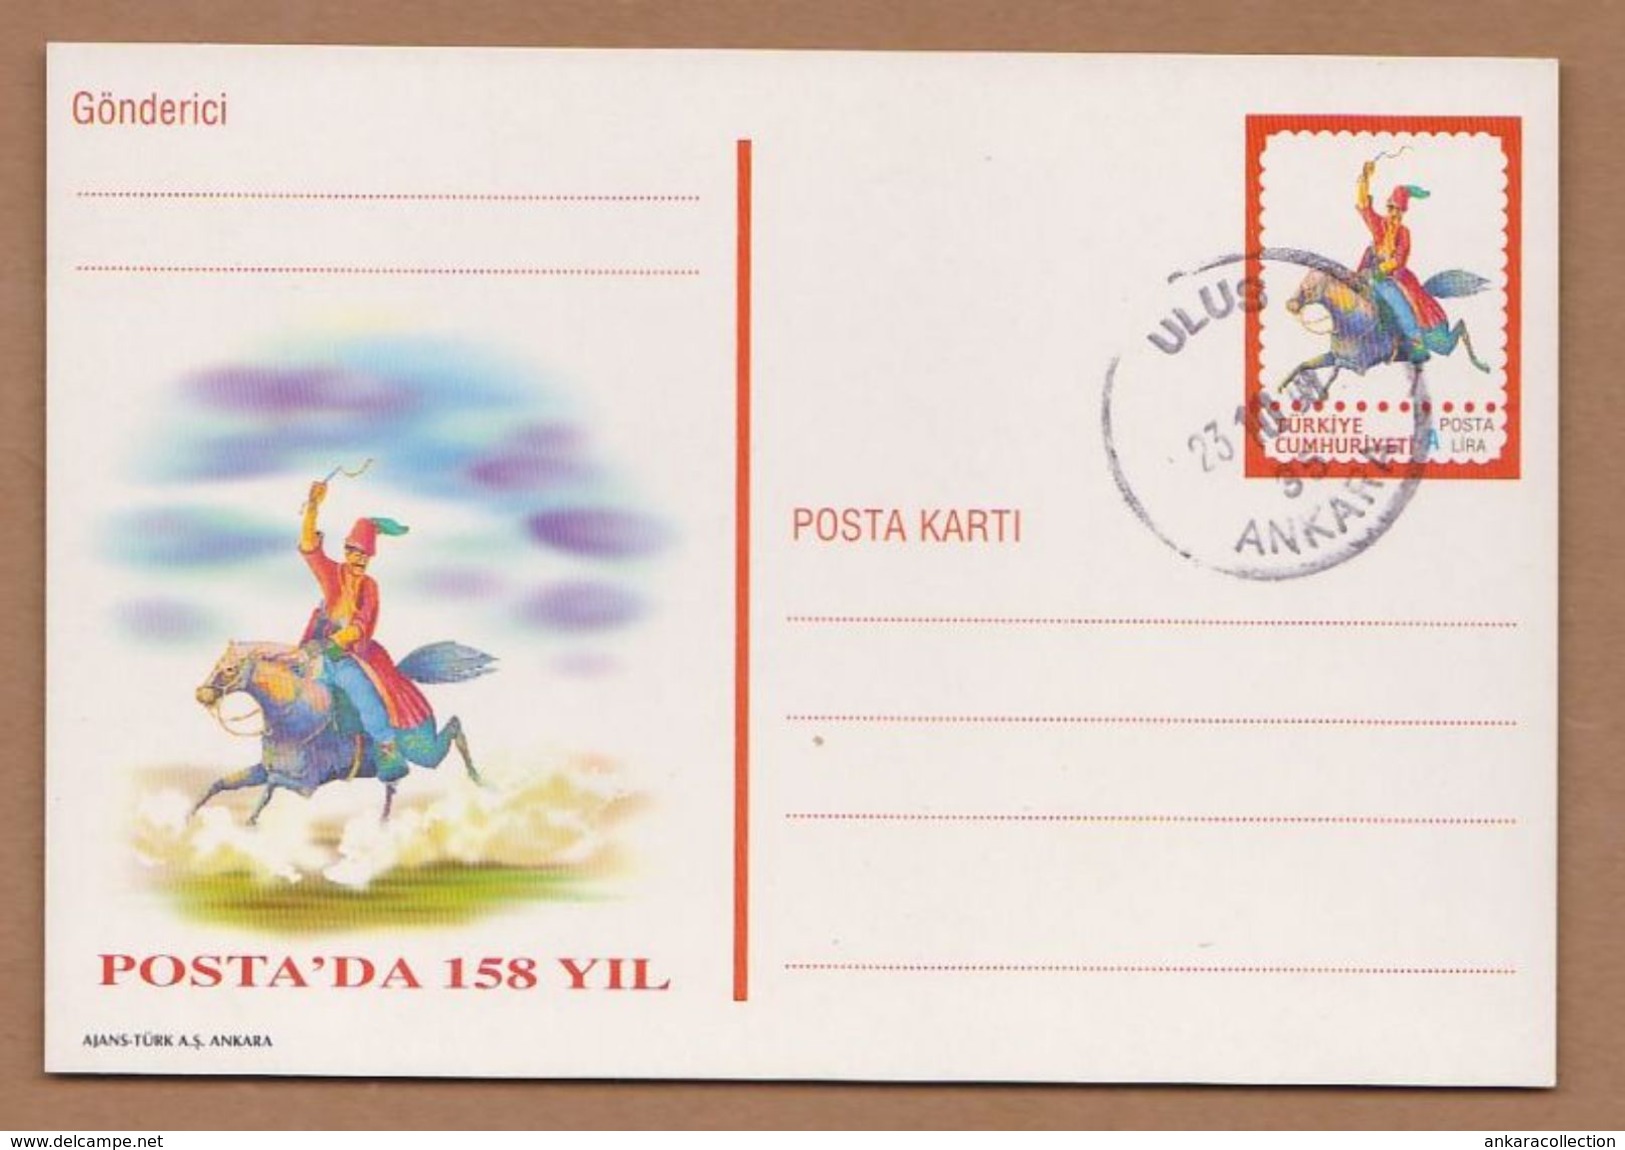 AC - TURKEY POSTAL STATIONERY - 158 YEARS IN THE POST ANKARA, 23 OCTOBER 1998 - Postal Stationery